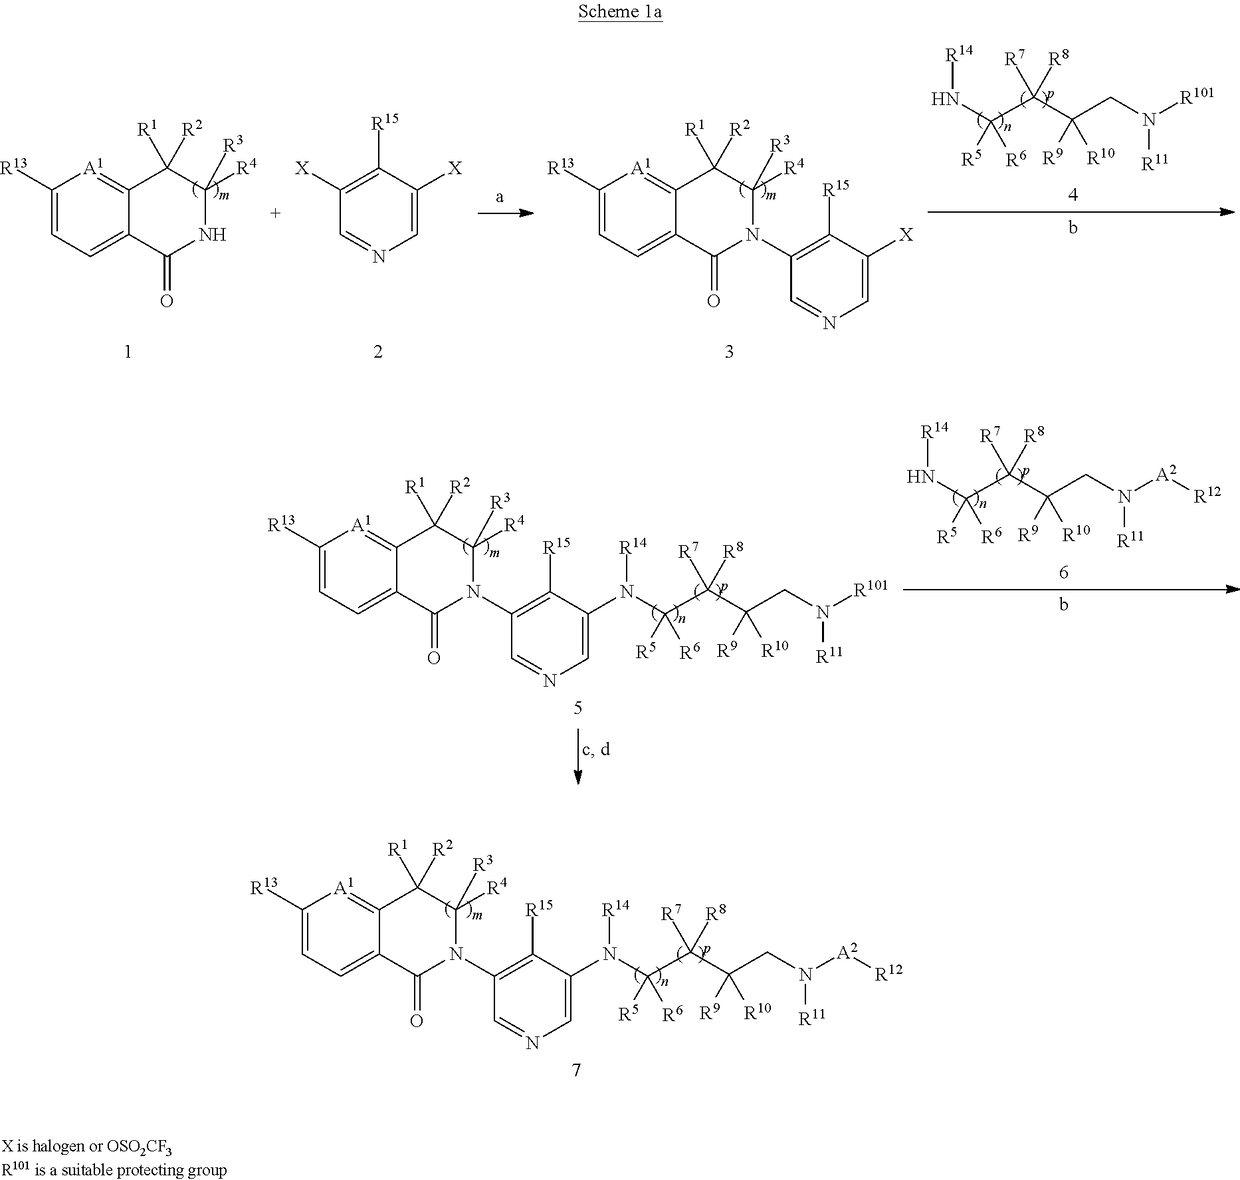 Spirodiamine derivatives as aldosterone synthase inhibitors